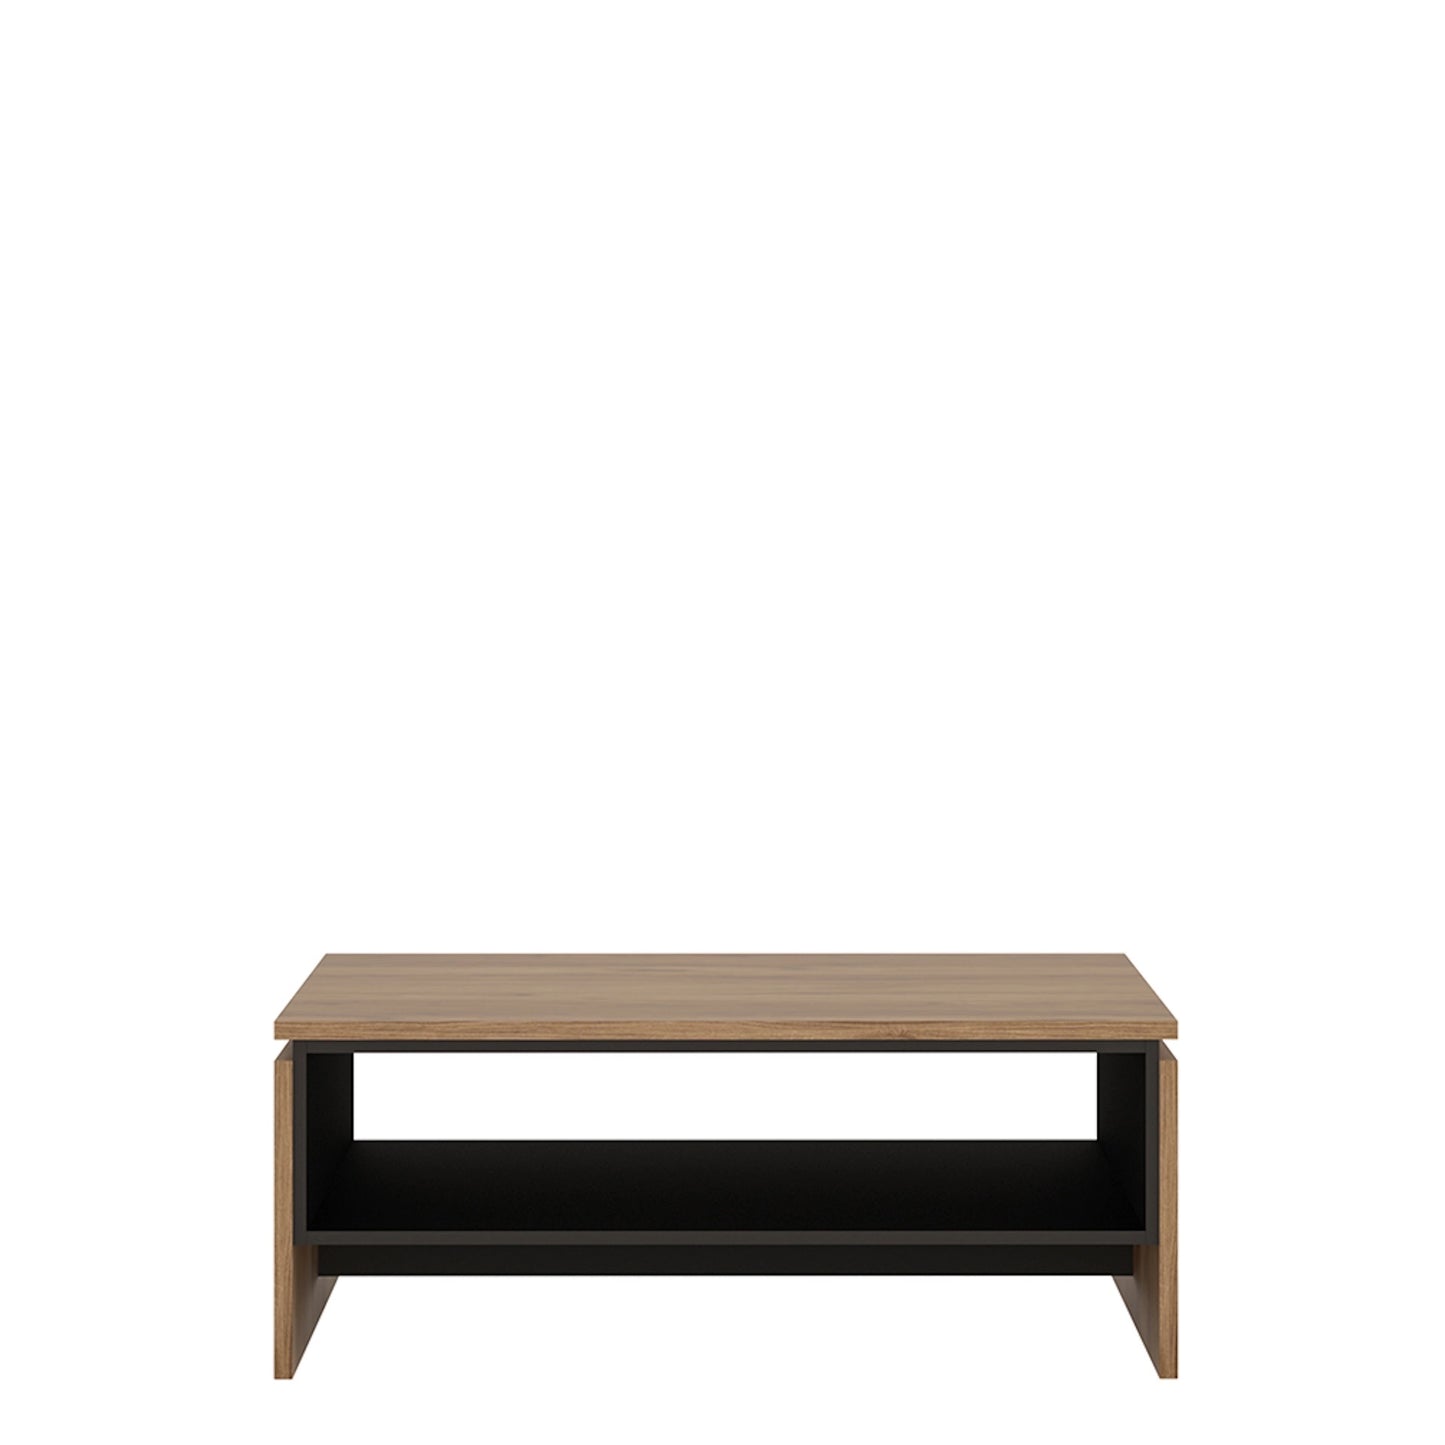 Furniture To Go Brolo Coffee Table Black & Dark Wood